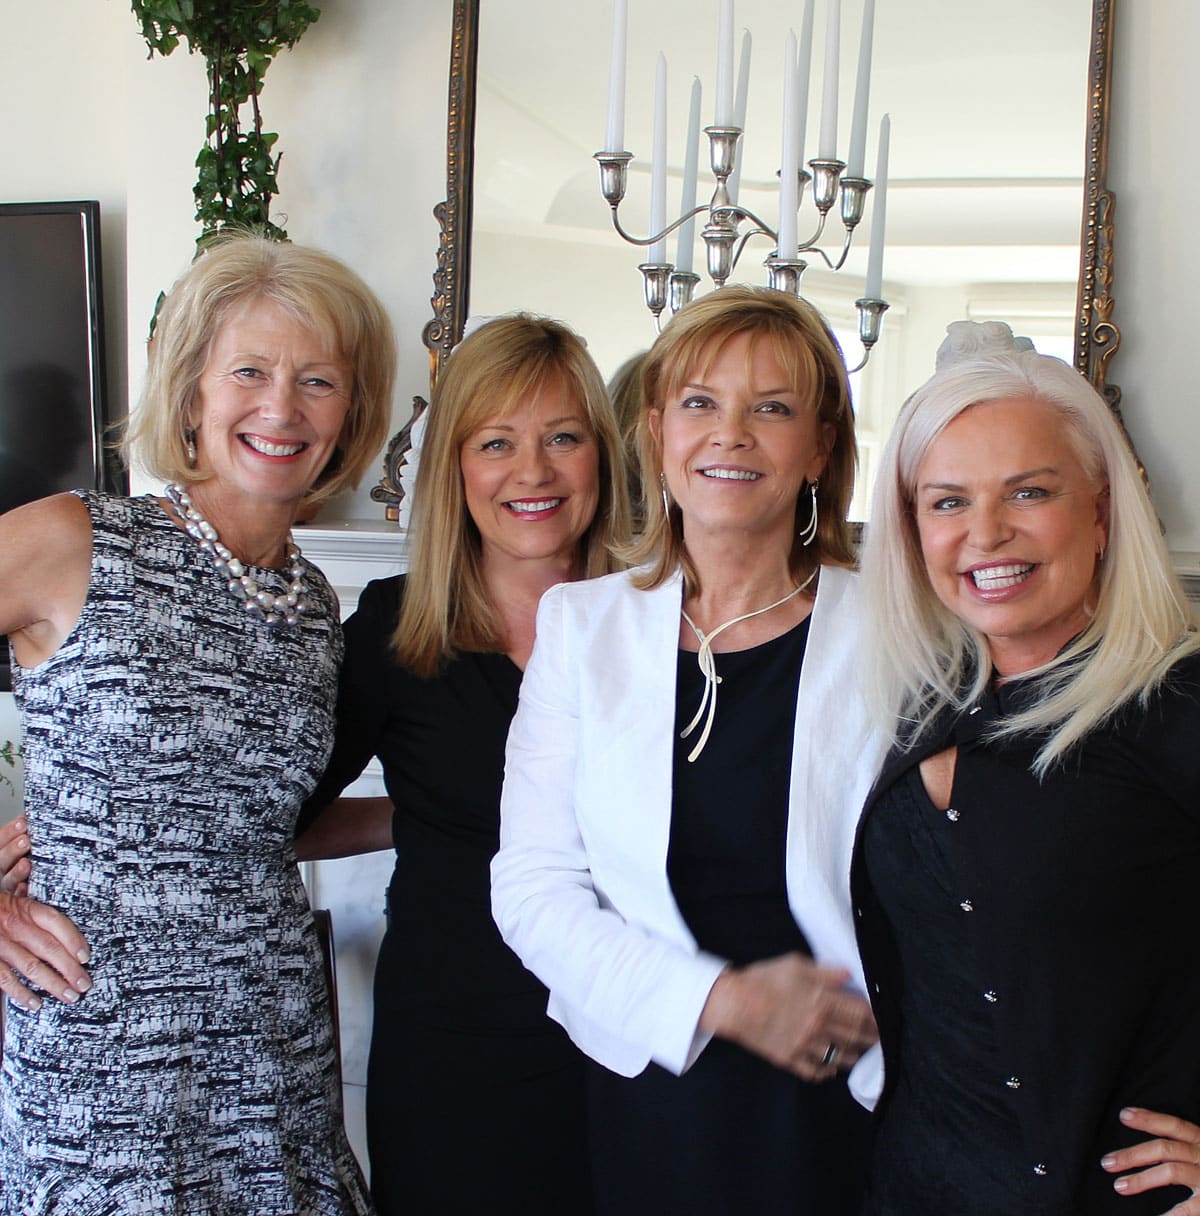 Janice with Linda, Mary Ann and Teresa